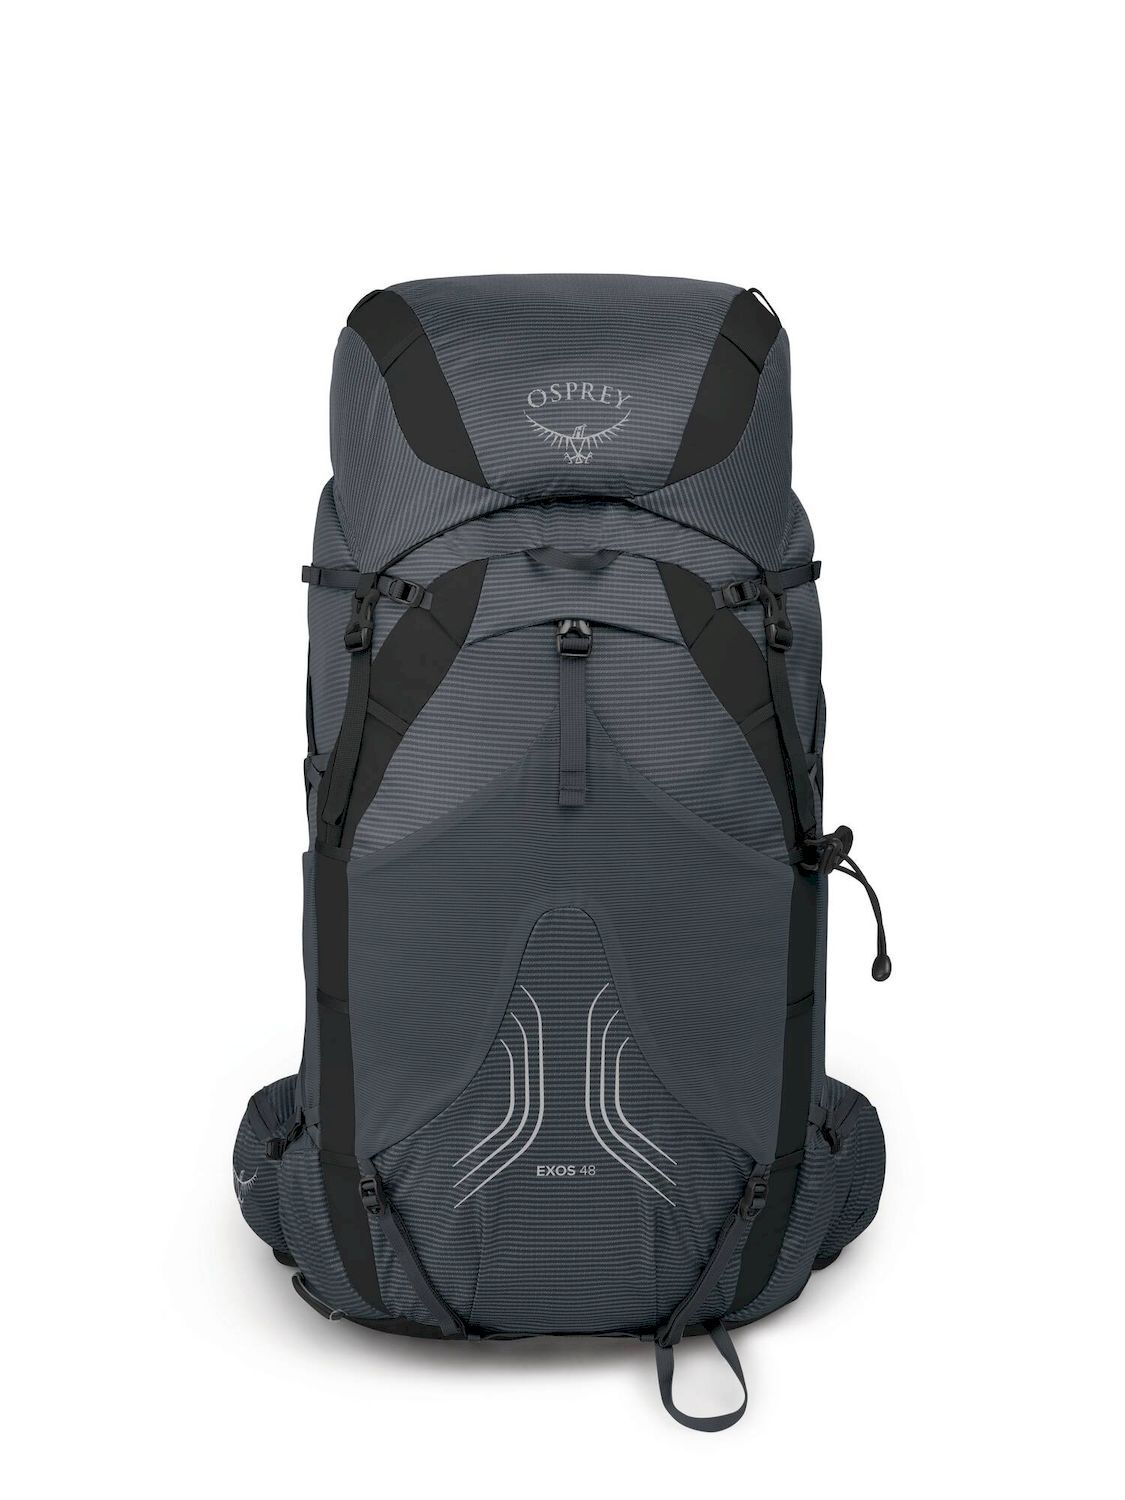 Osprey Exos 48 - Trekking rygsæk - Herrer